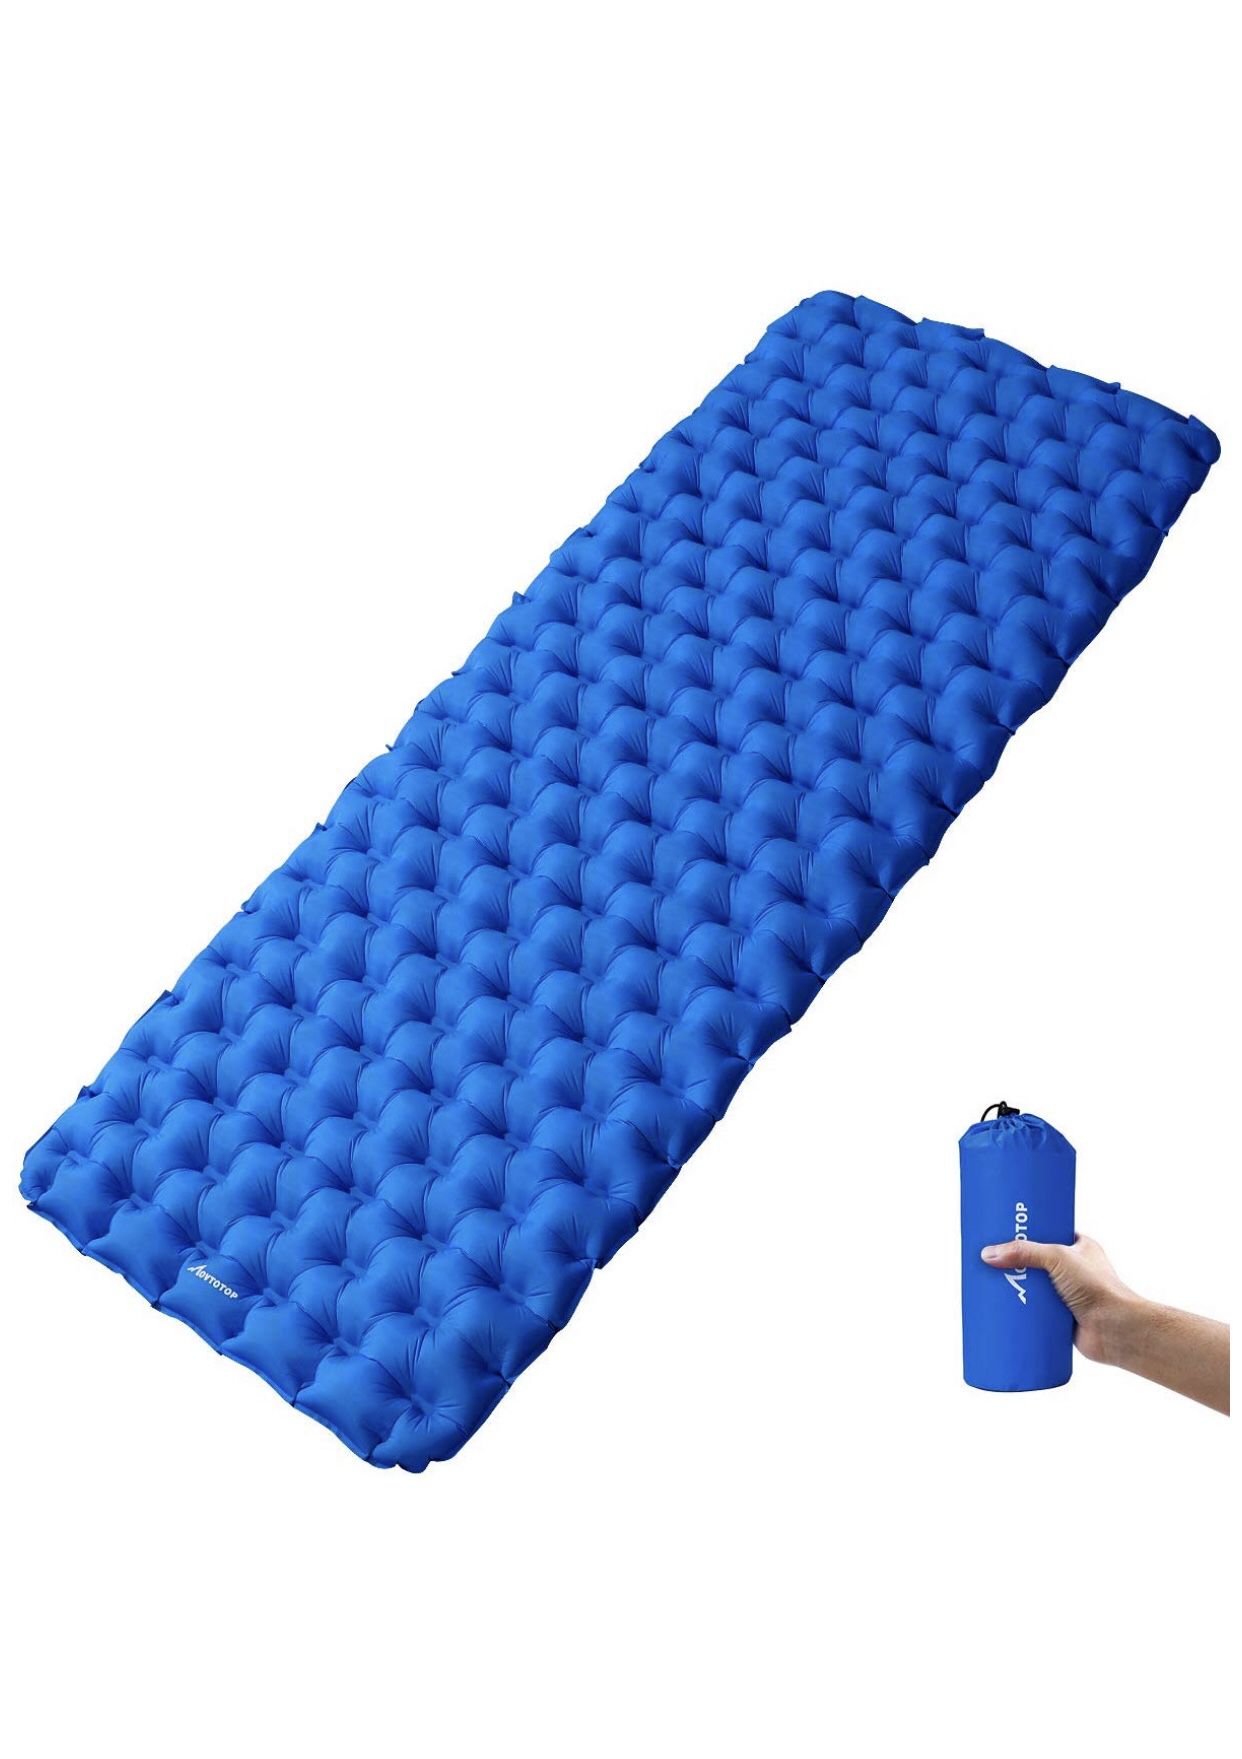 Inflatable sleeping pad